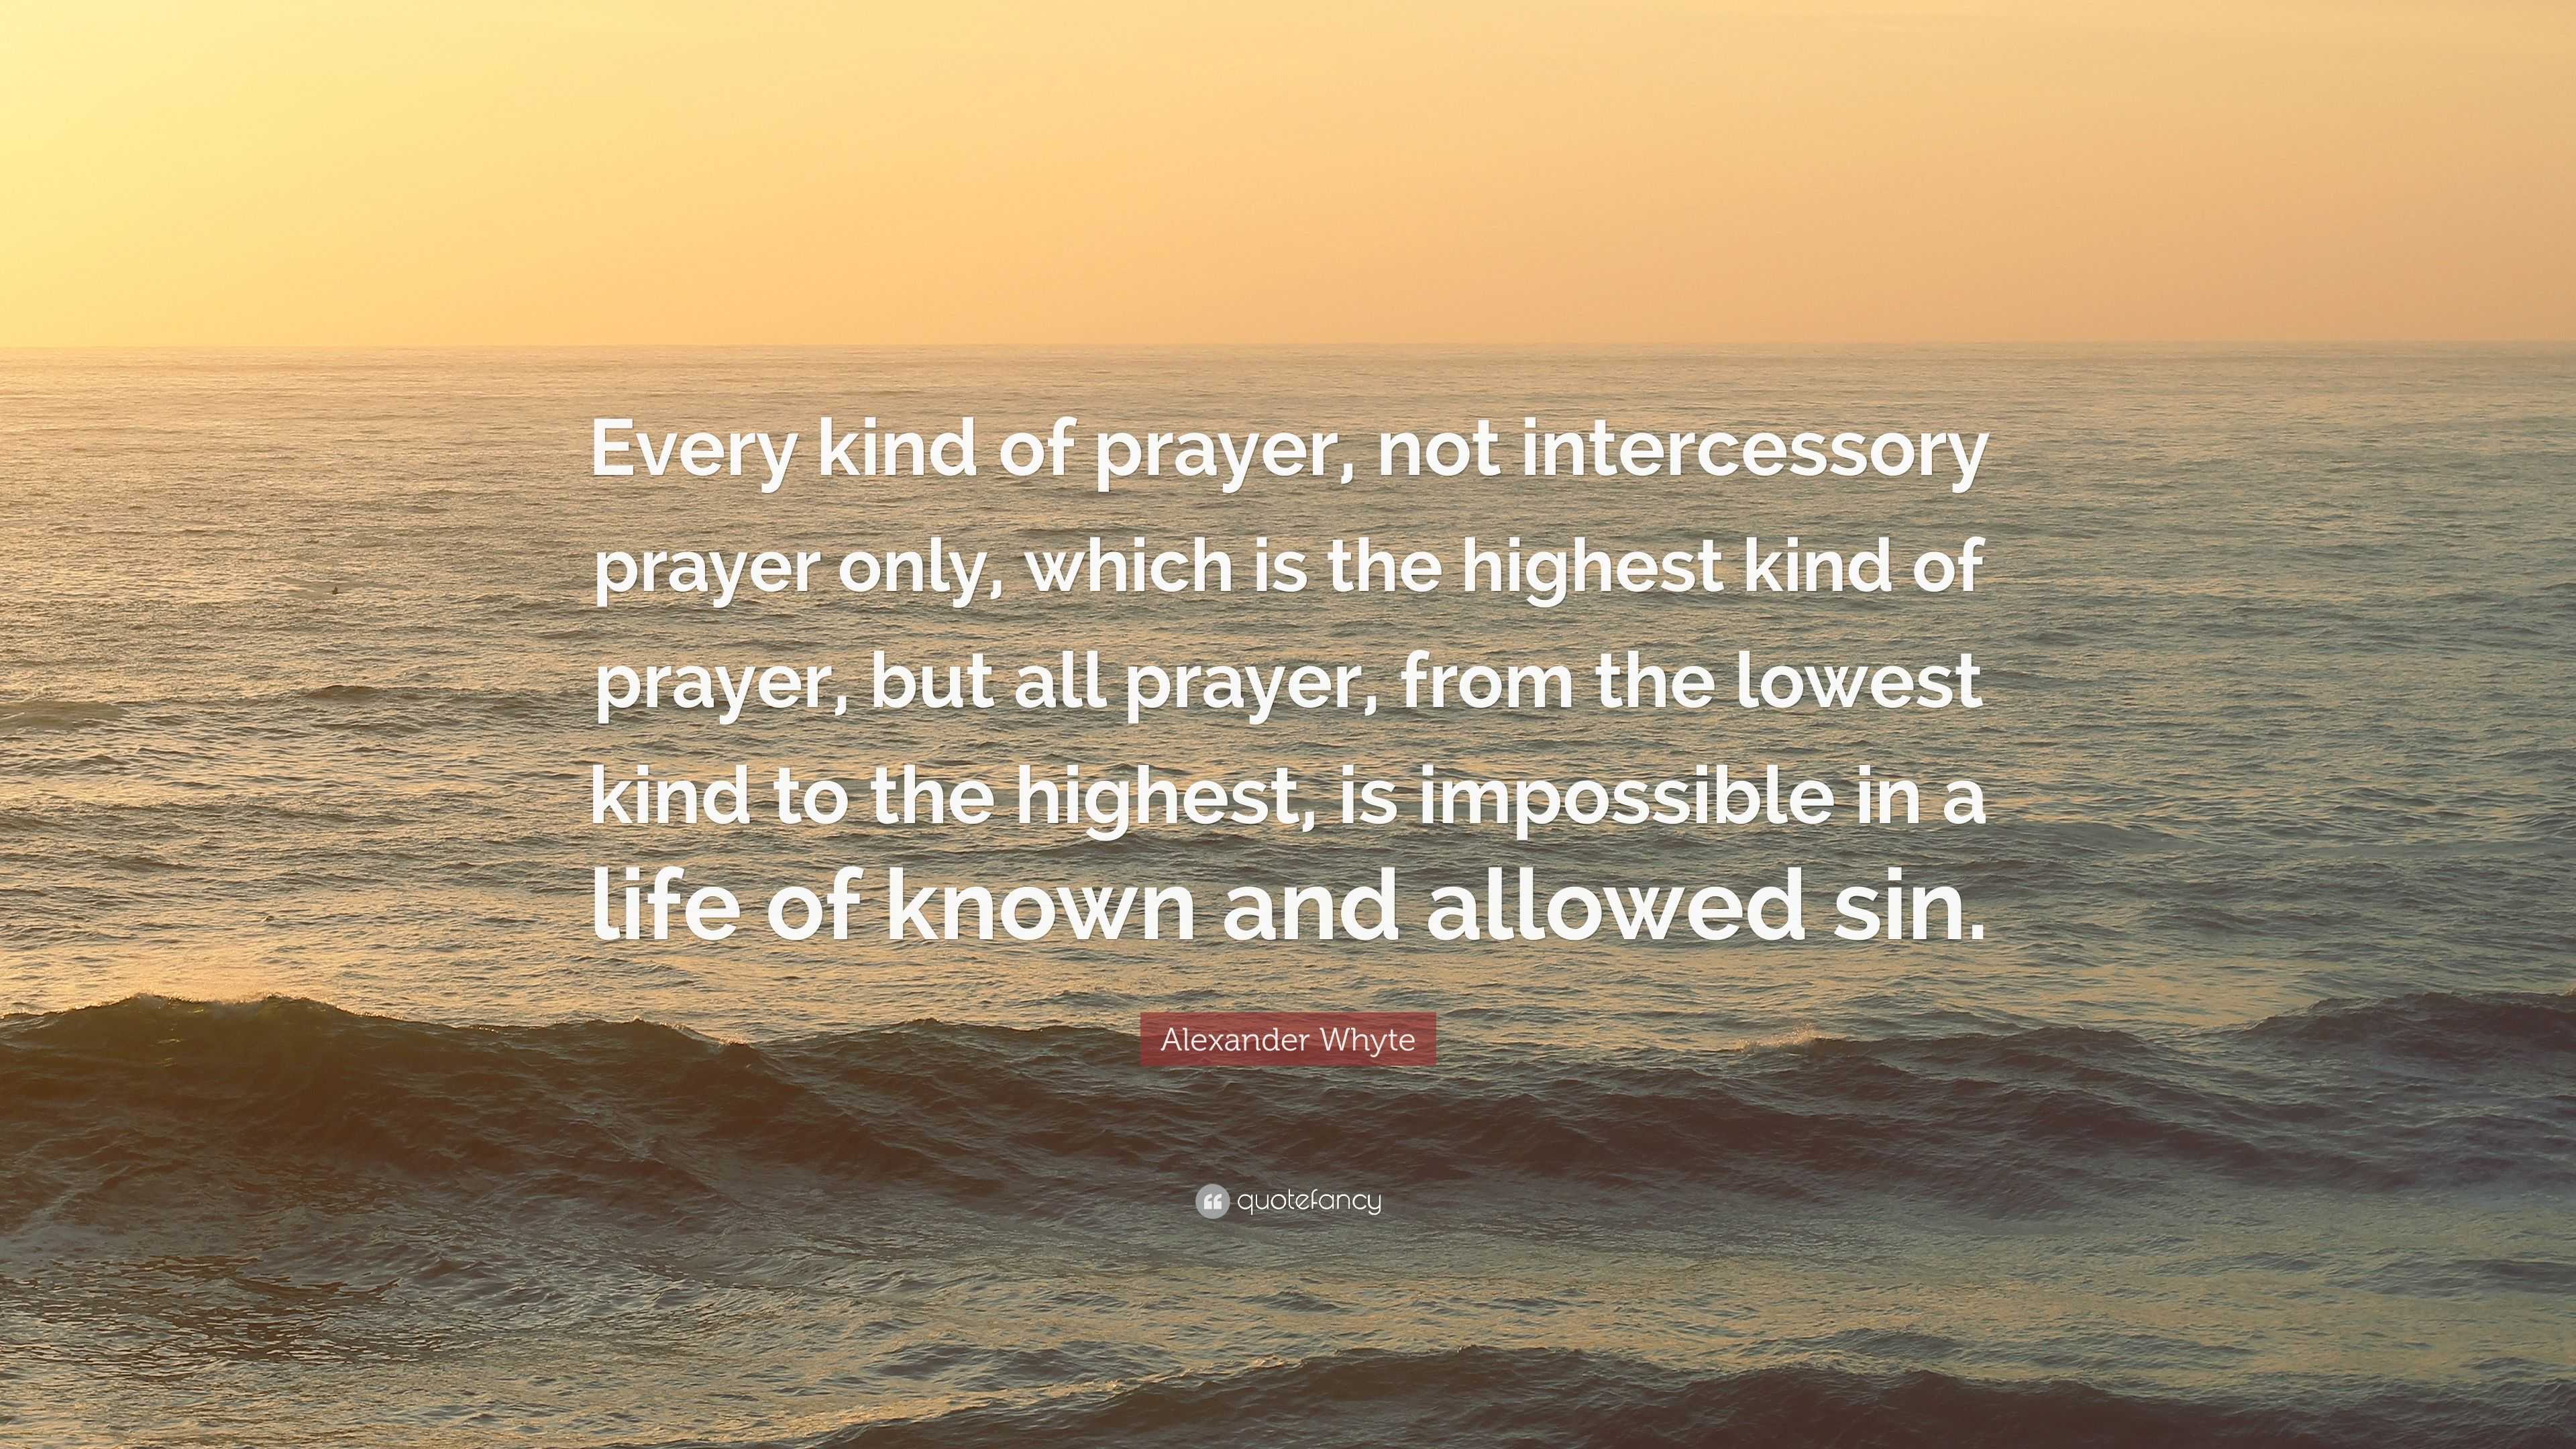 Alexander Whyte Quote: “Every kind of prayer, not intercessory prayer ...